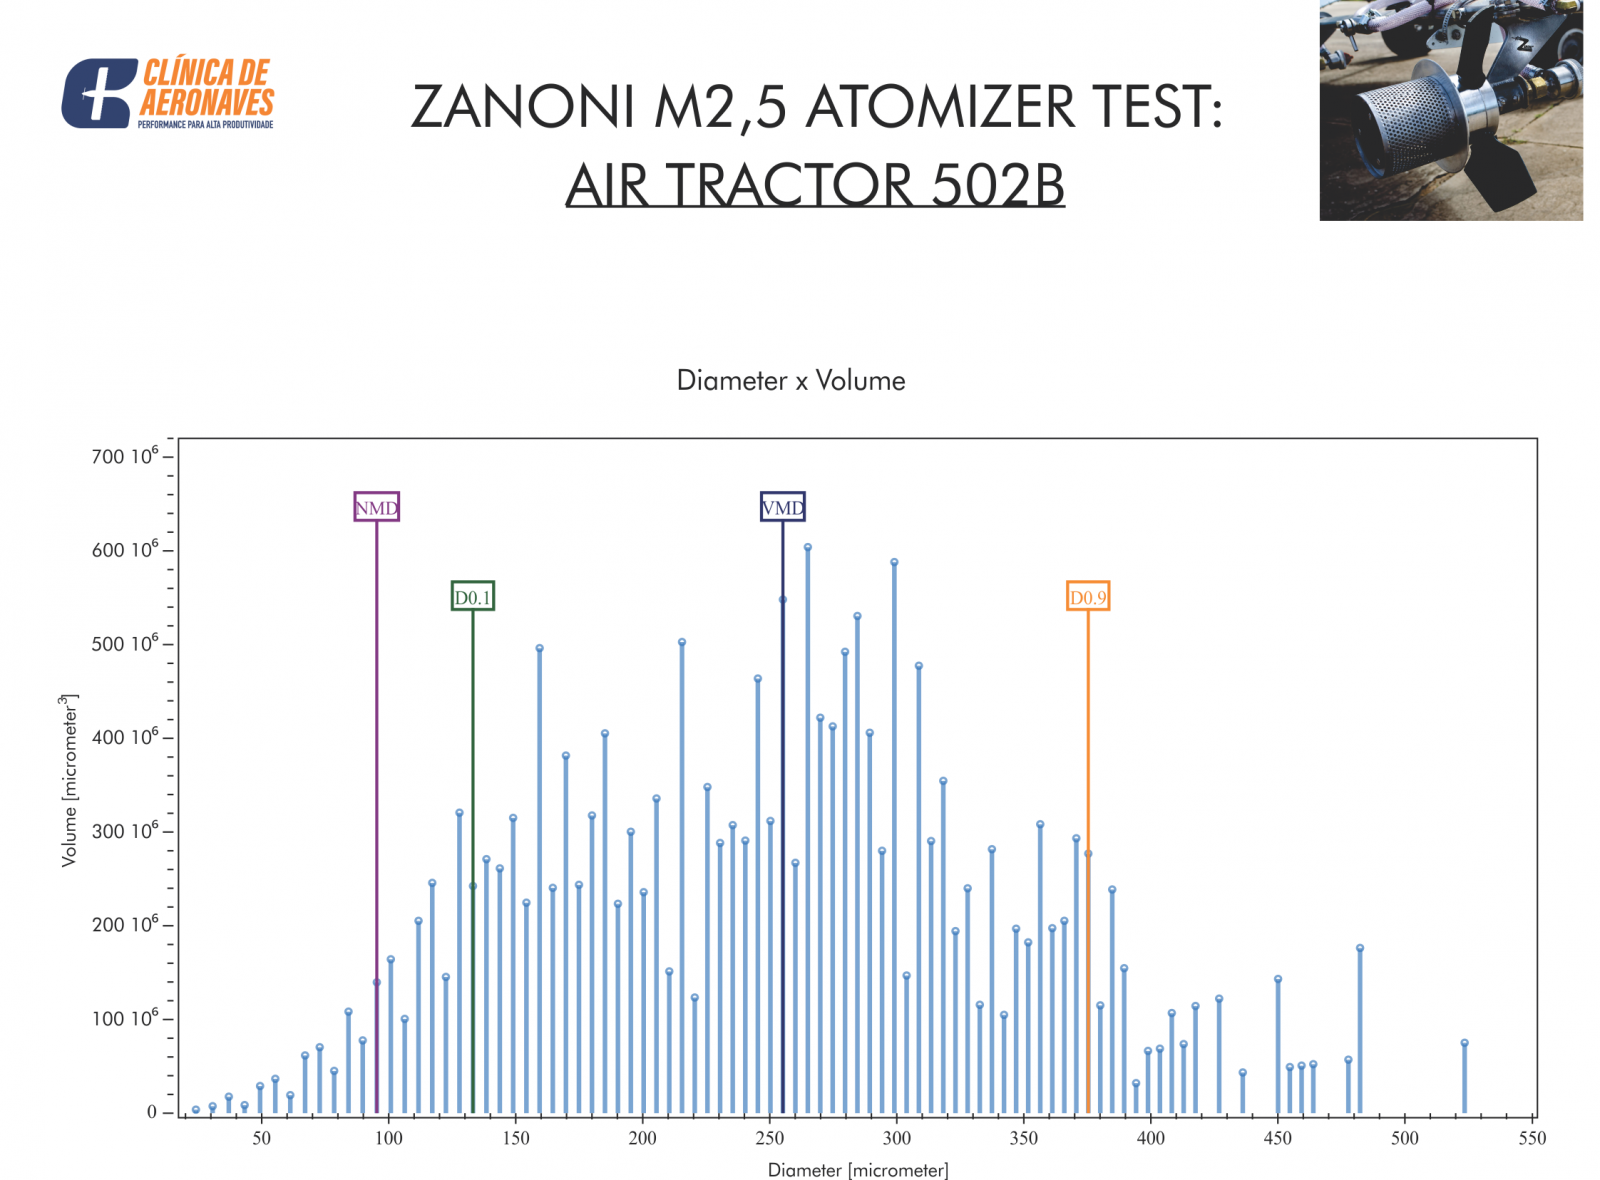 Zanoni atomizer nozzles show excellent performance in turbo aircraft